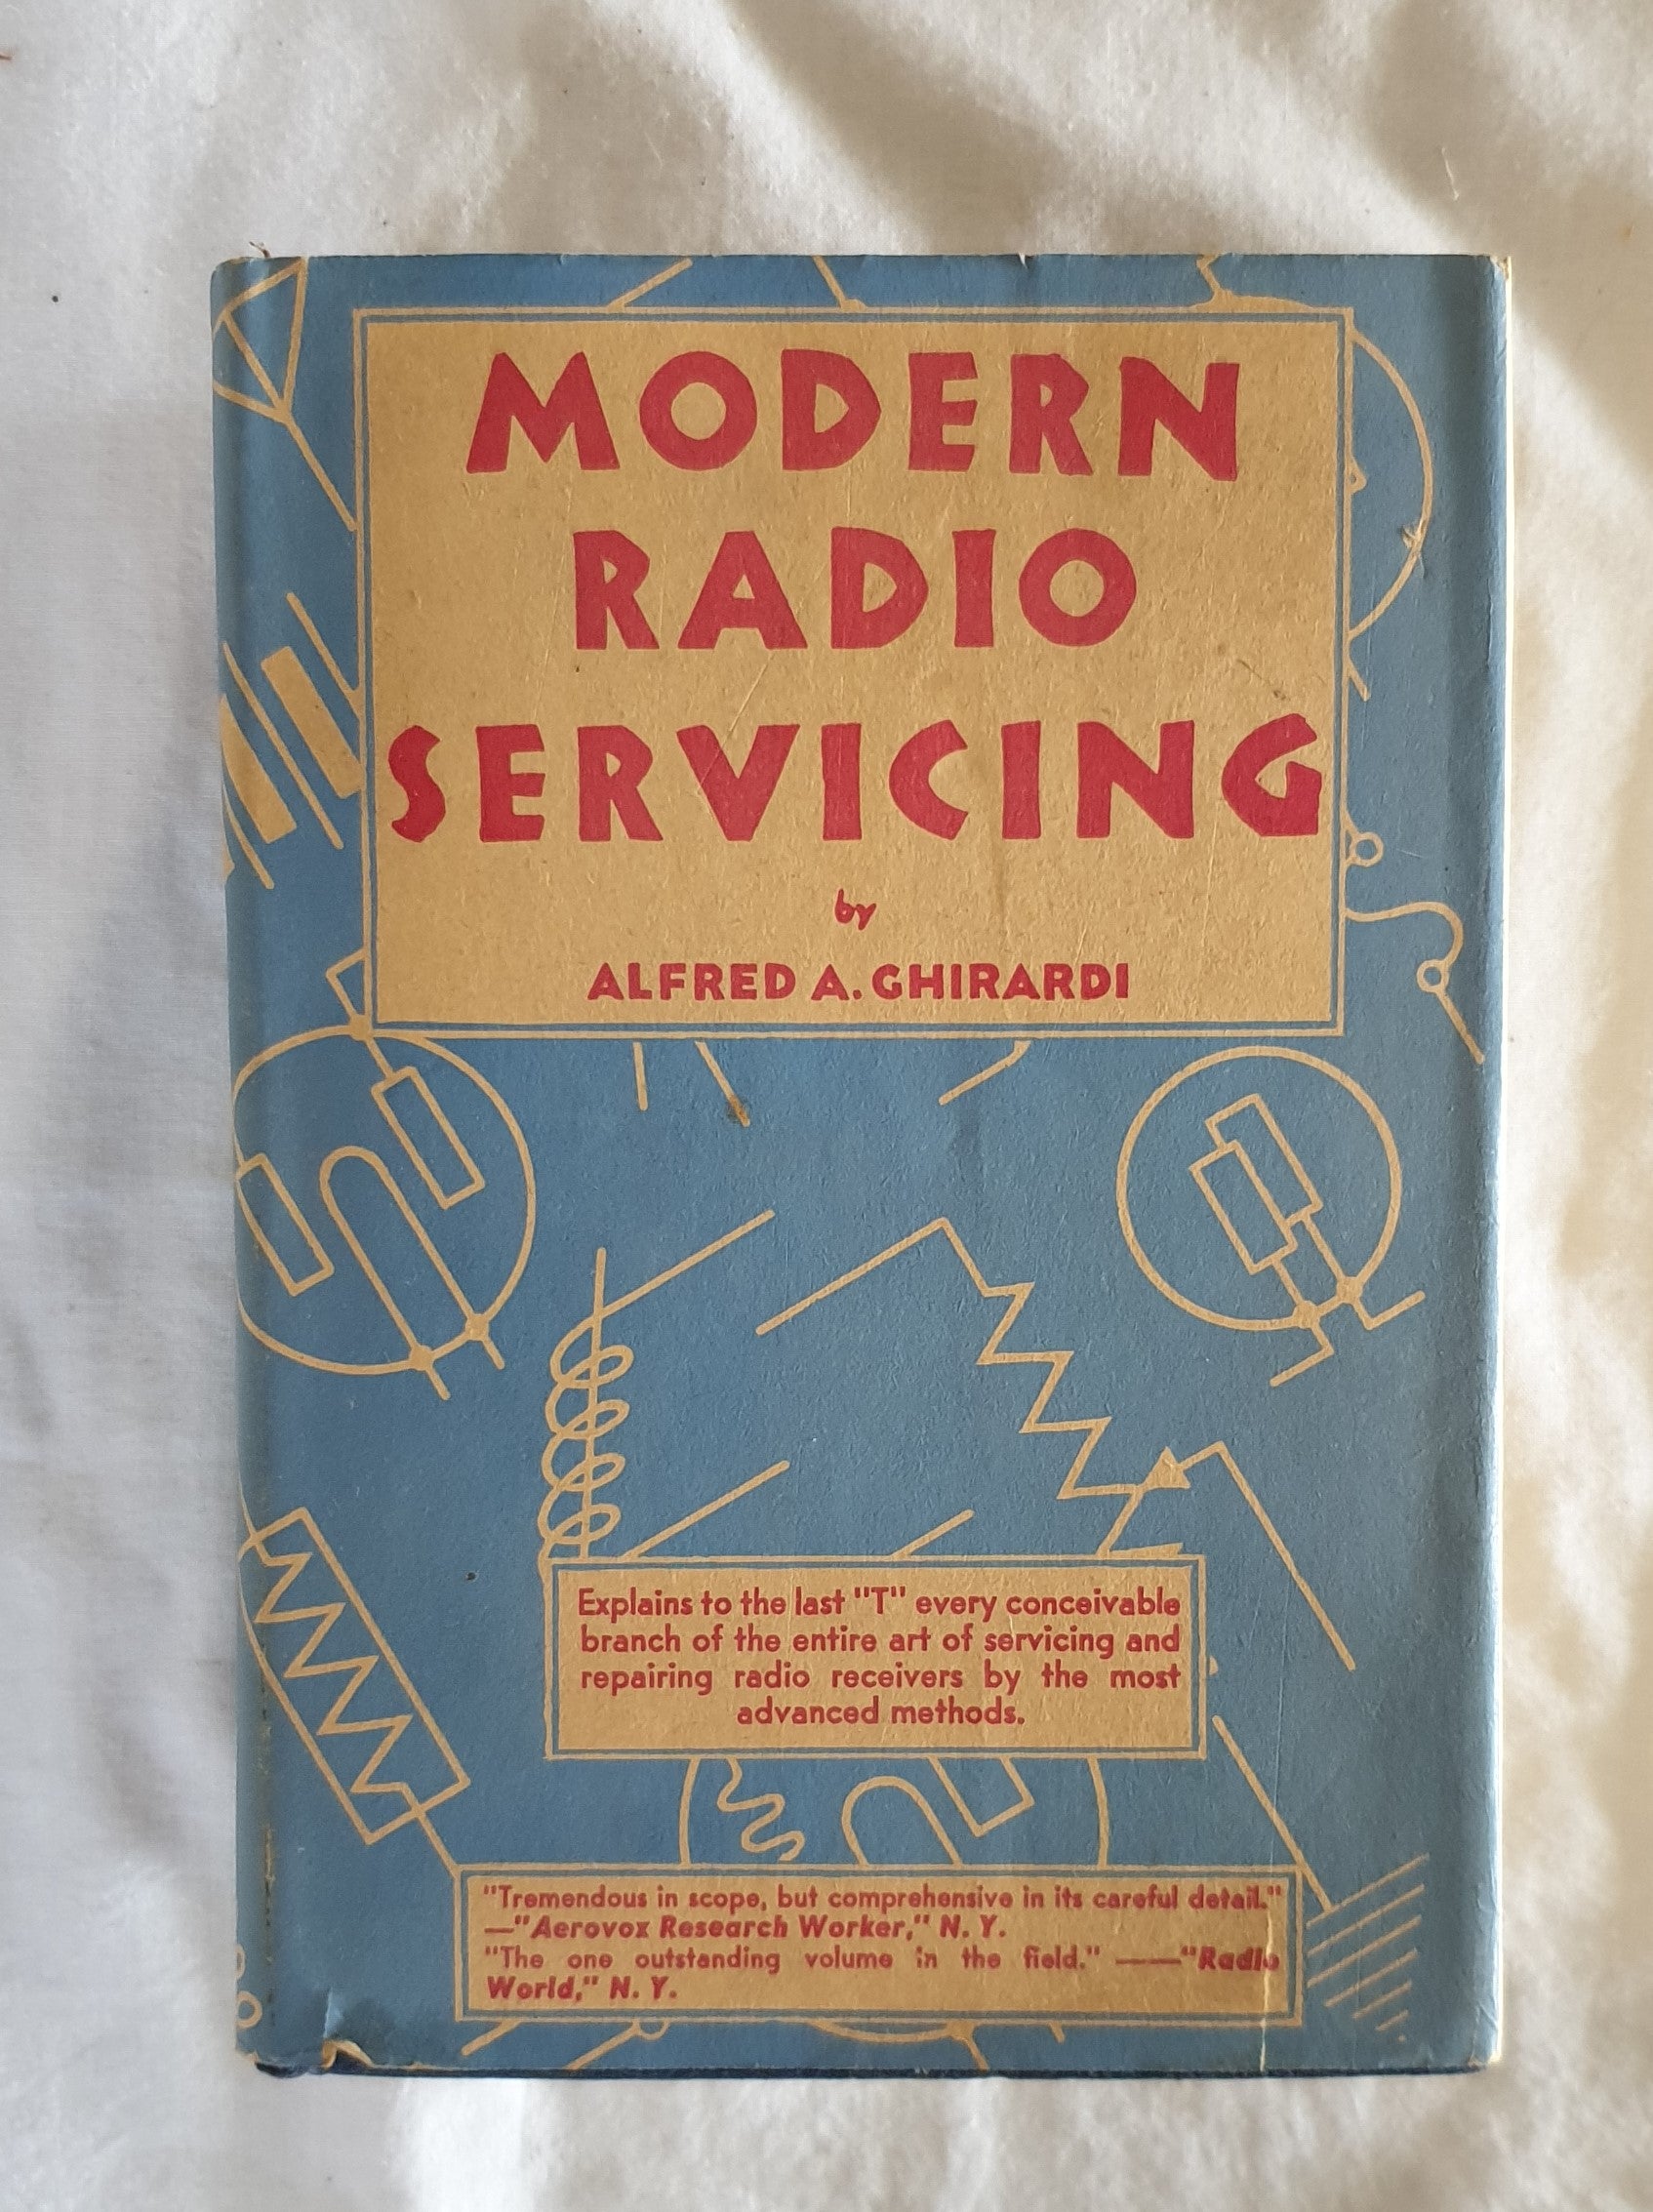 Modern Radio Servicing by Alfred A. Ghirardi